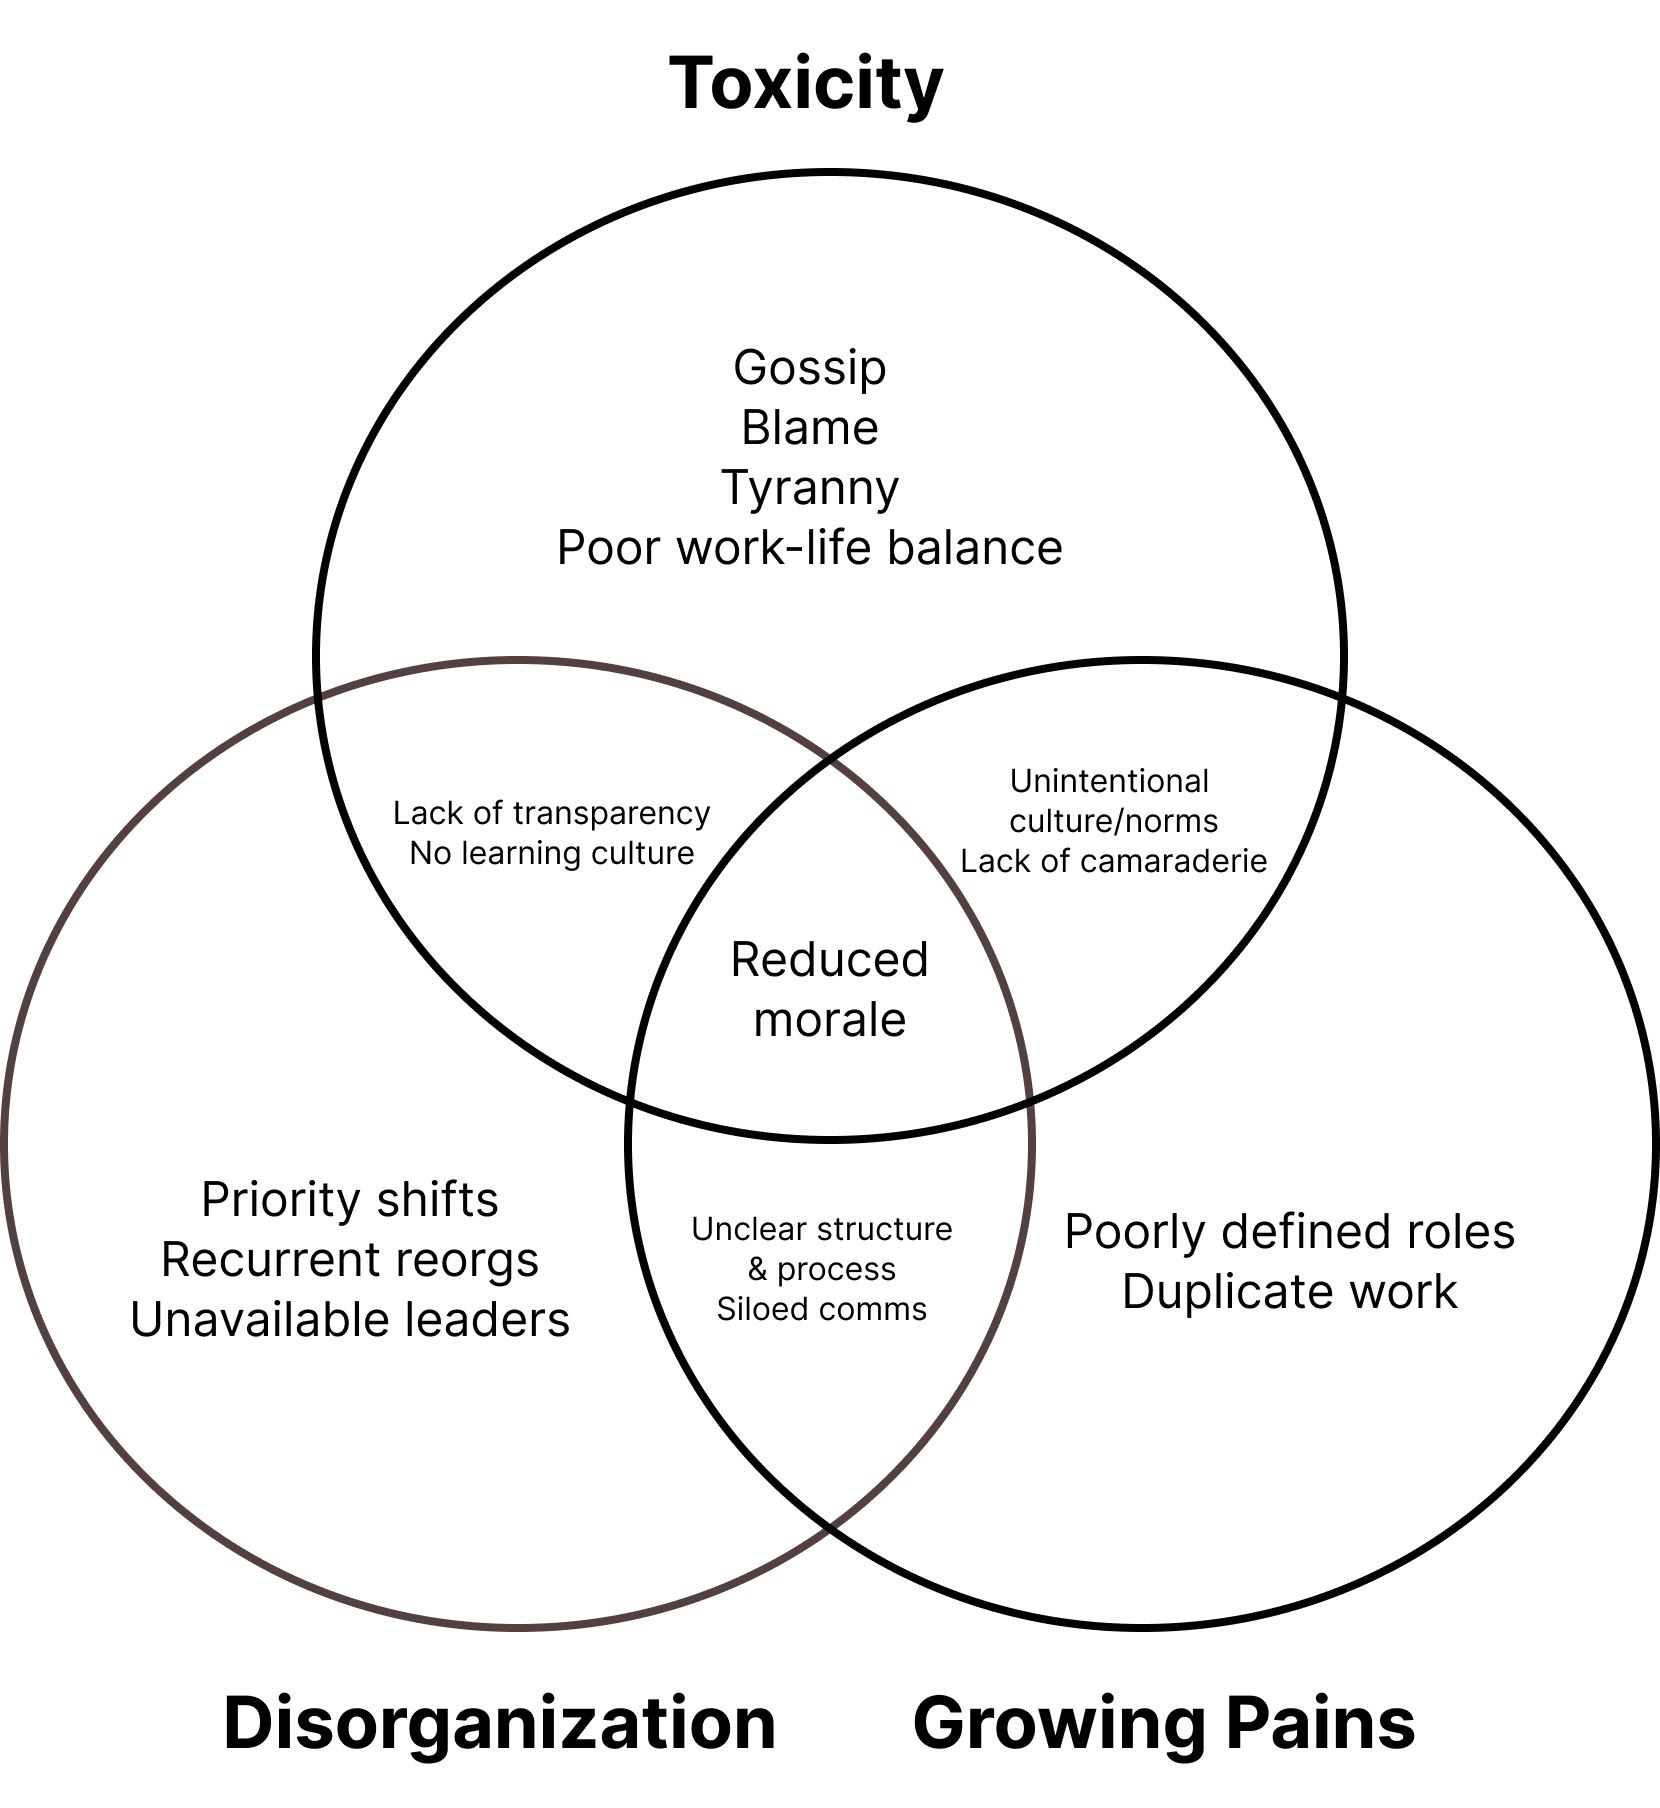 A venn diagram with three circles: disorganization, growing pains, and toxicity